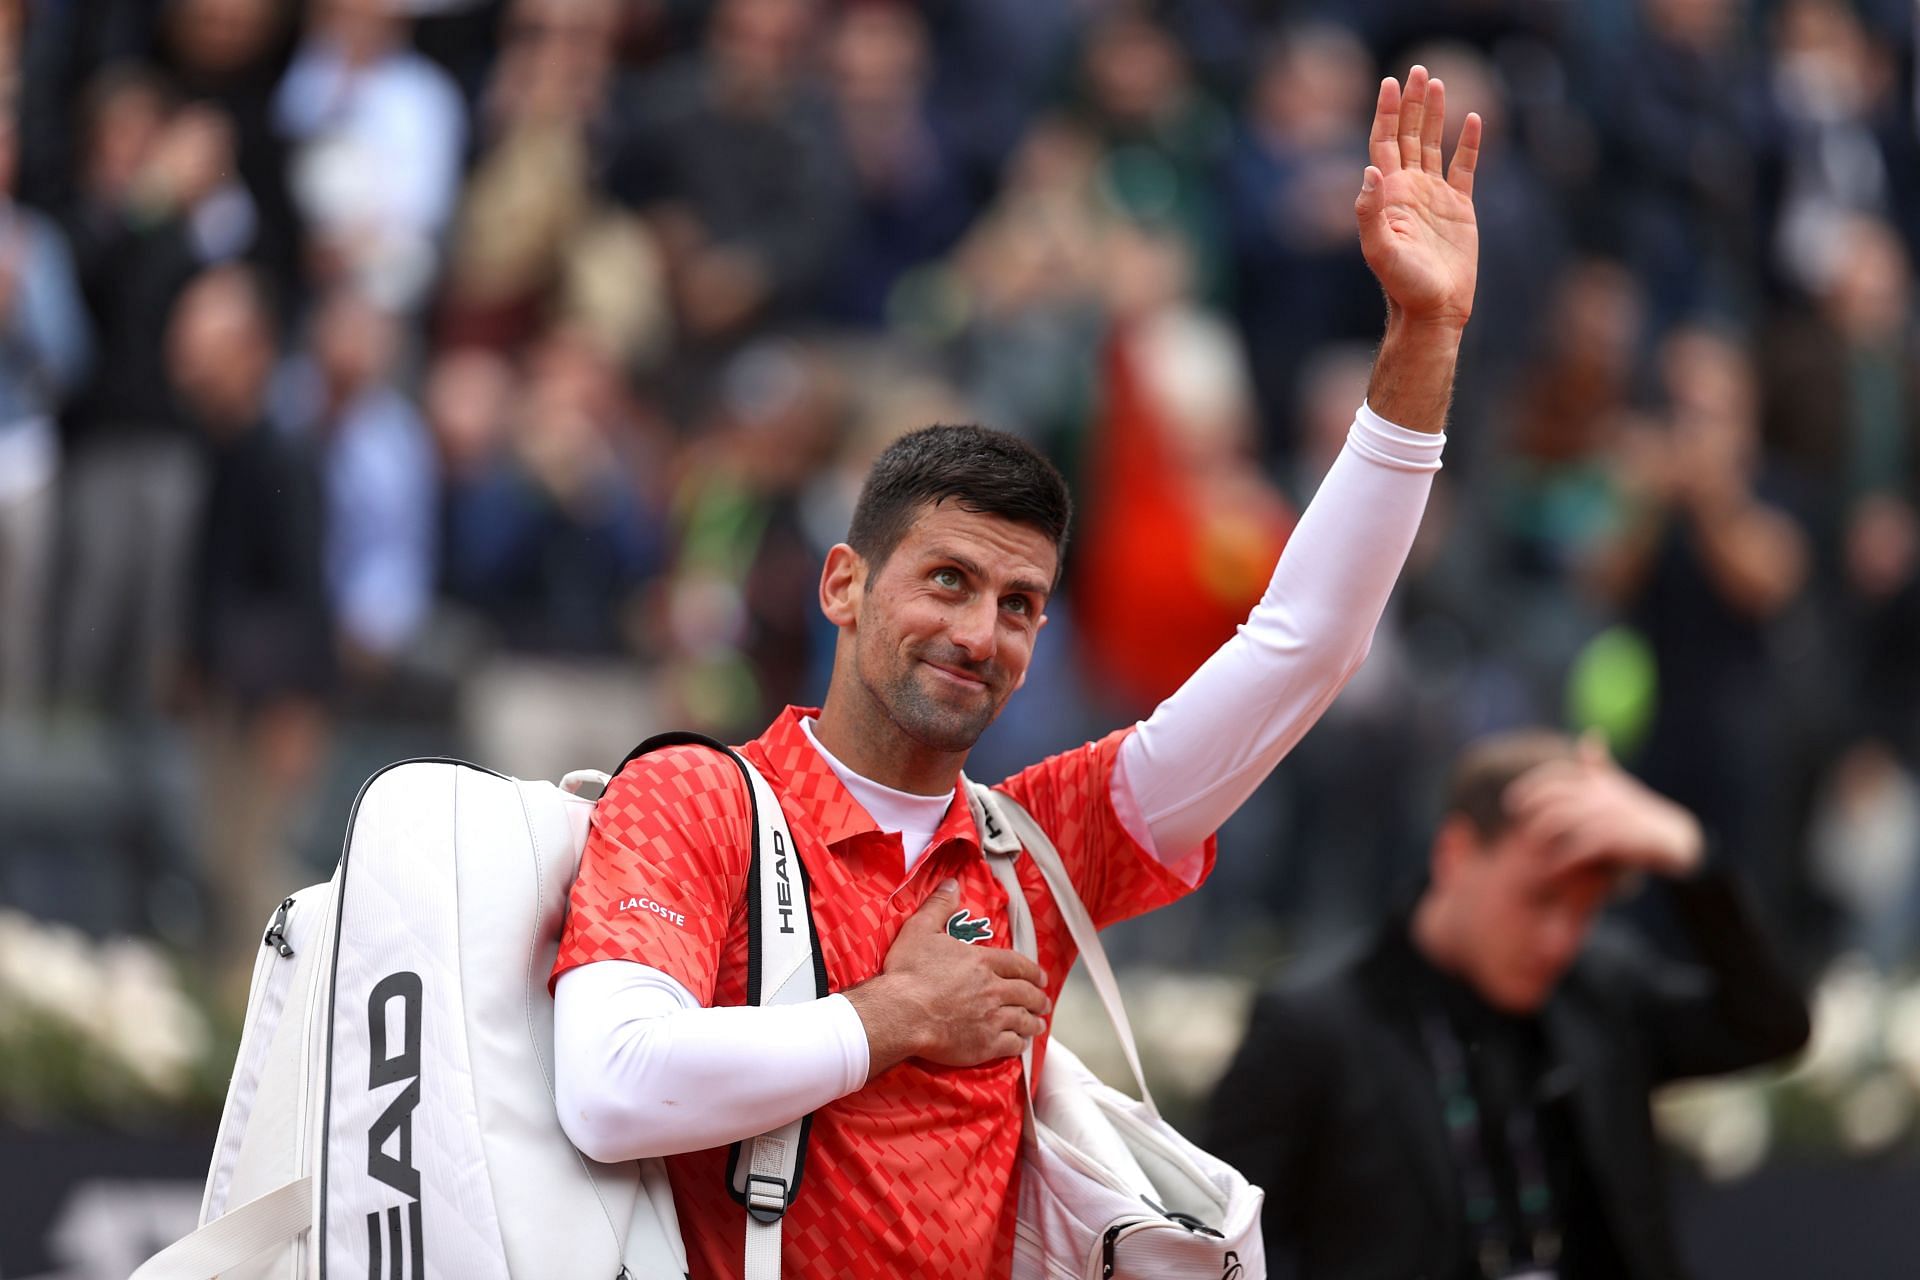 Novak Djokovic at the Italian Open earlier this month.